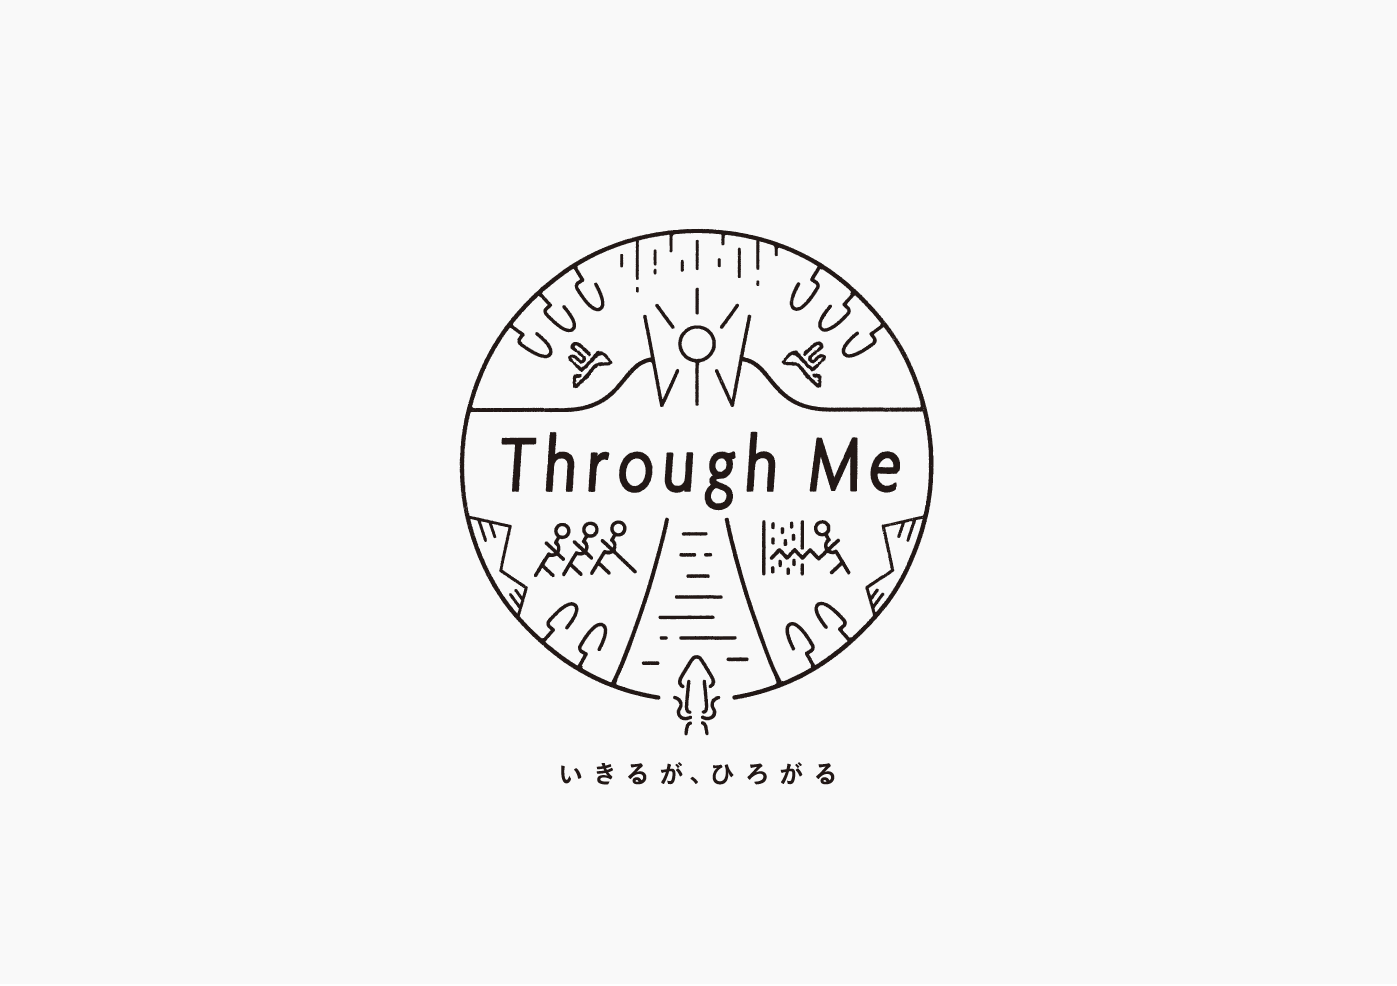 Through Me